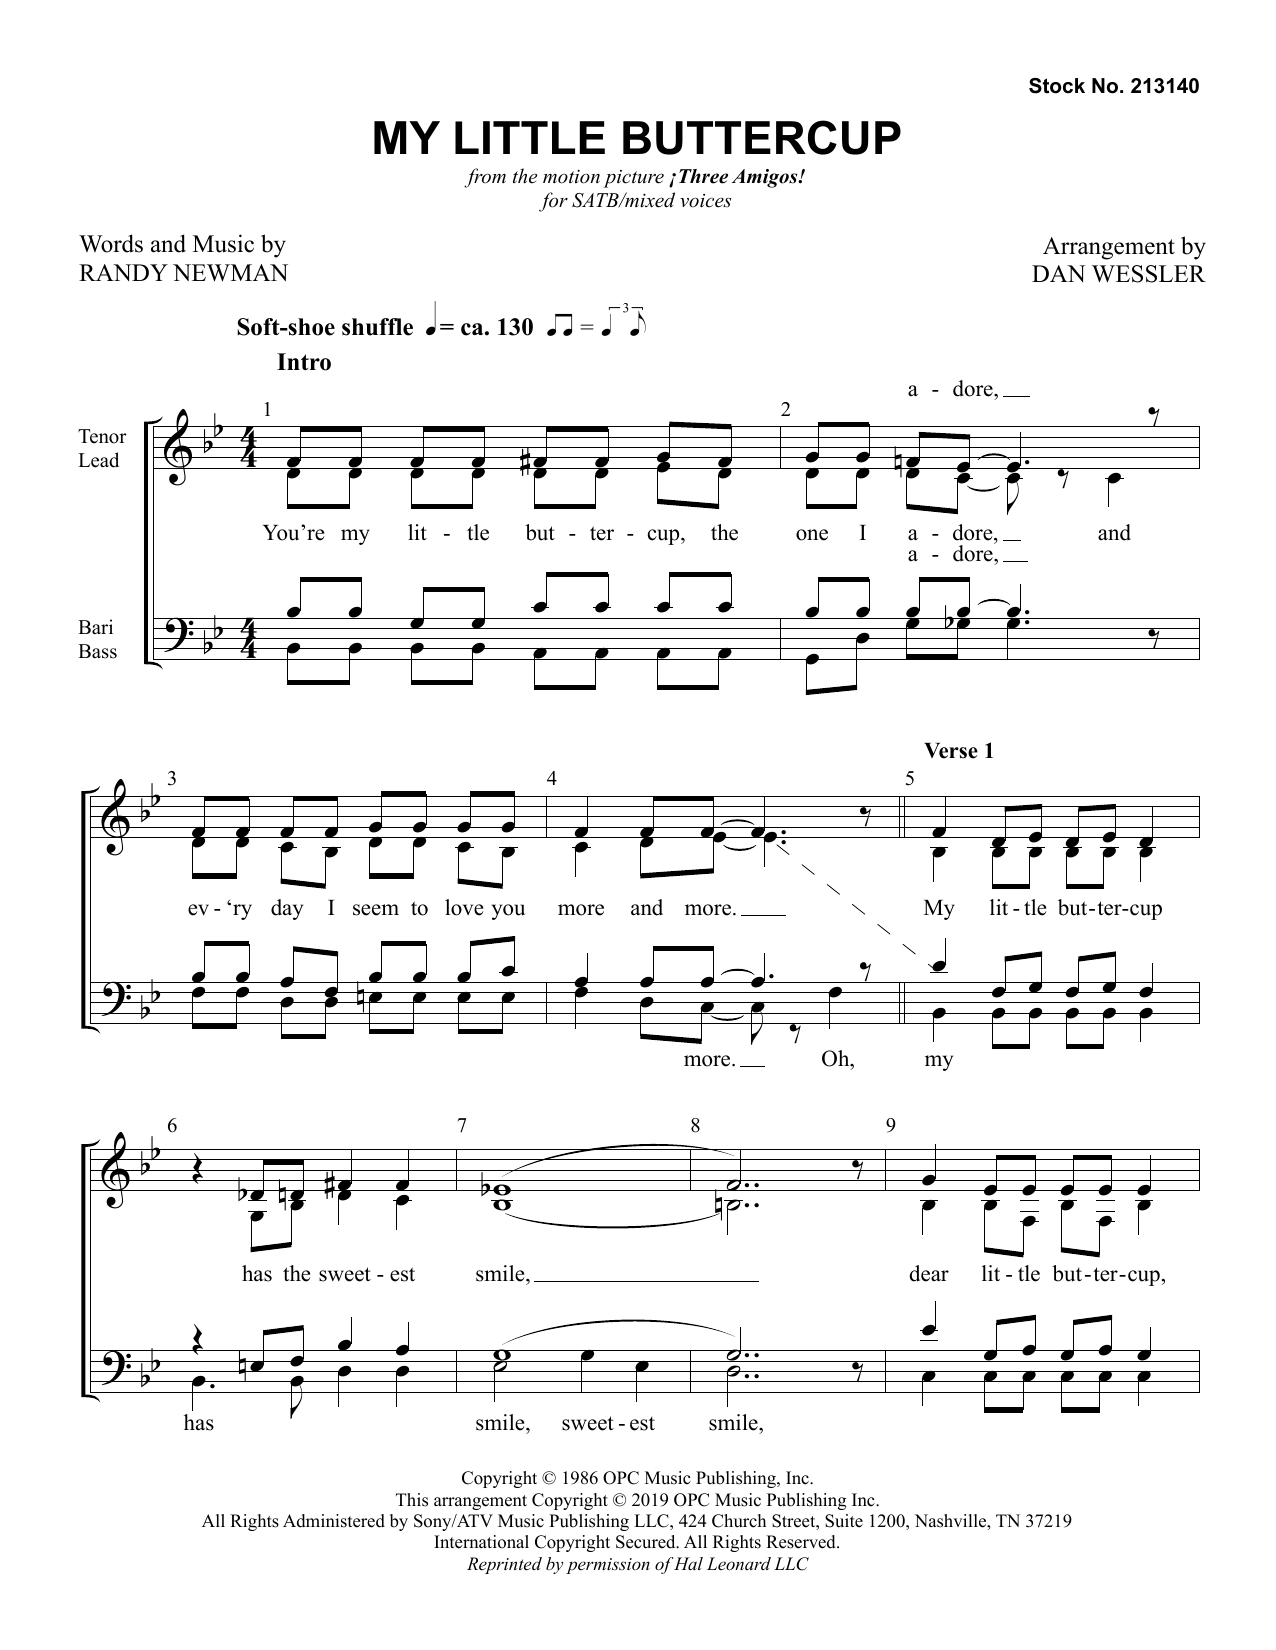 Randy Newman My Little Buttercup (arr. Dan Wessler) Sheet Music Notes & Chords for SATB Choir - Download or Print PDF